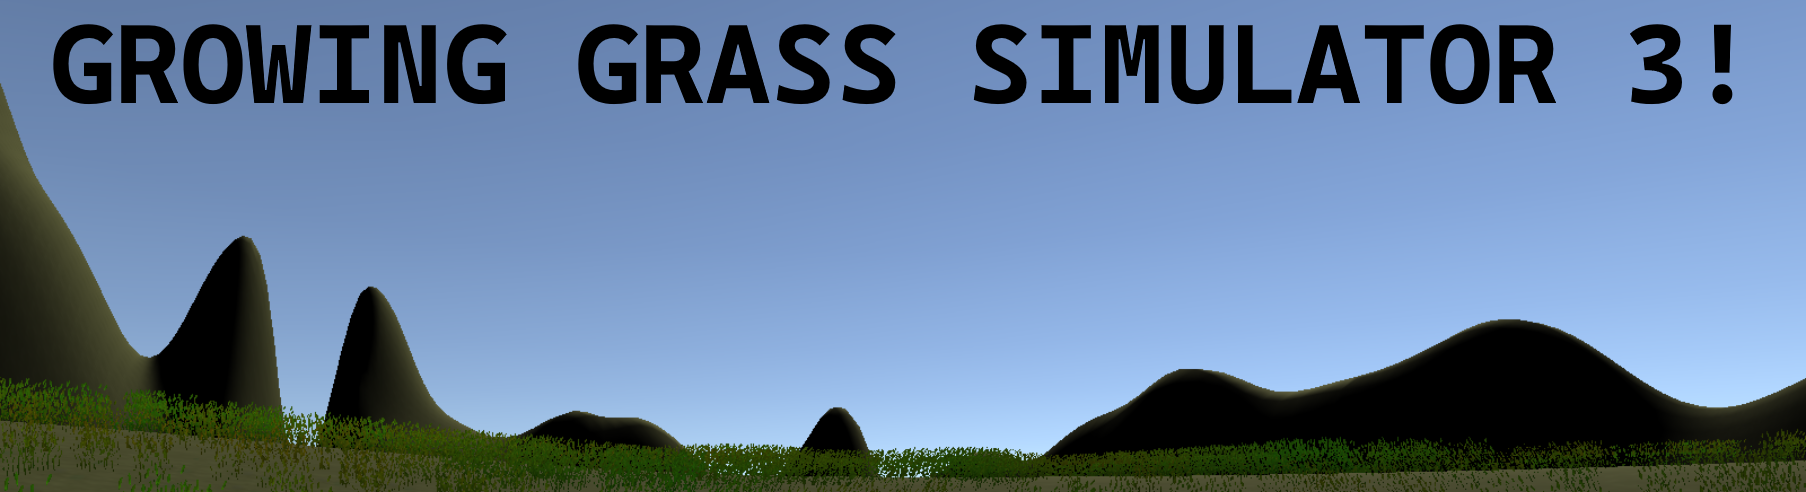 Growing Grass Simulator 3